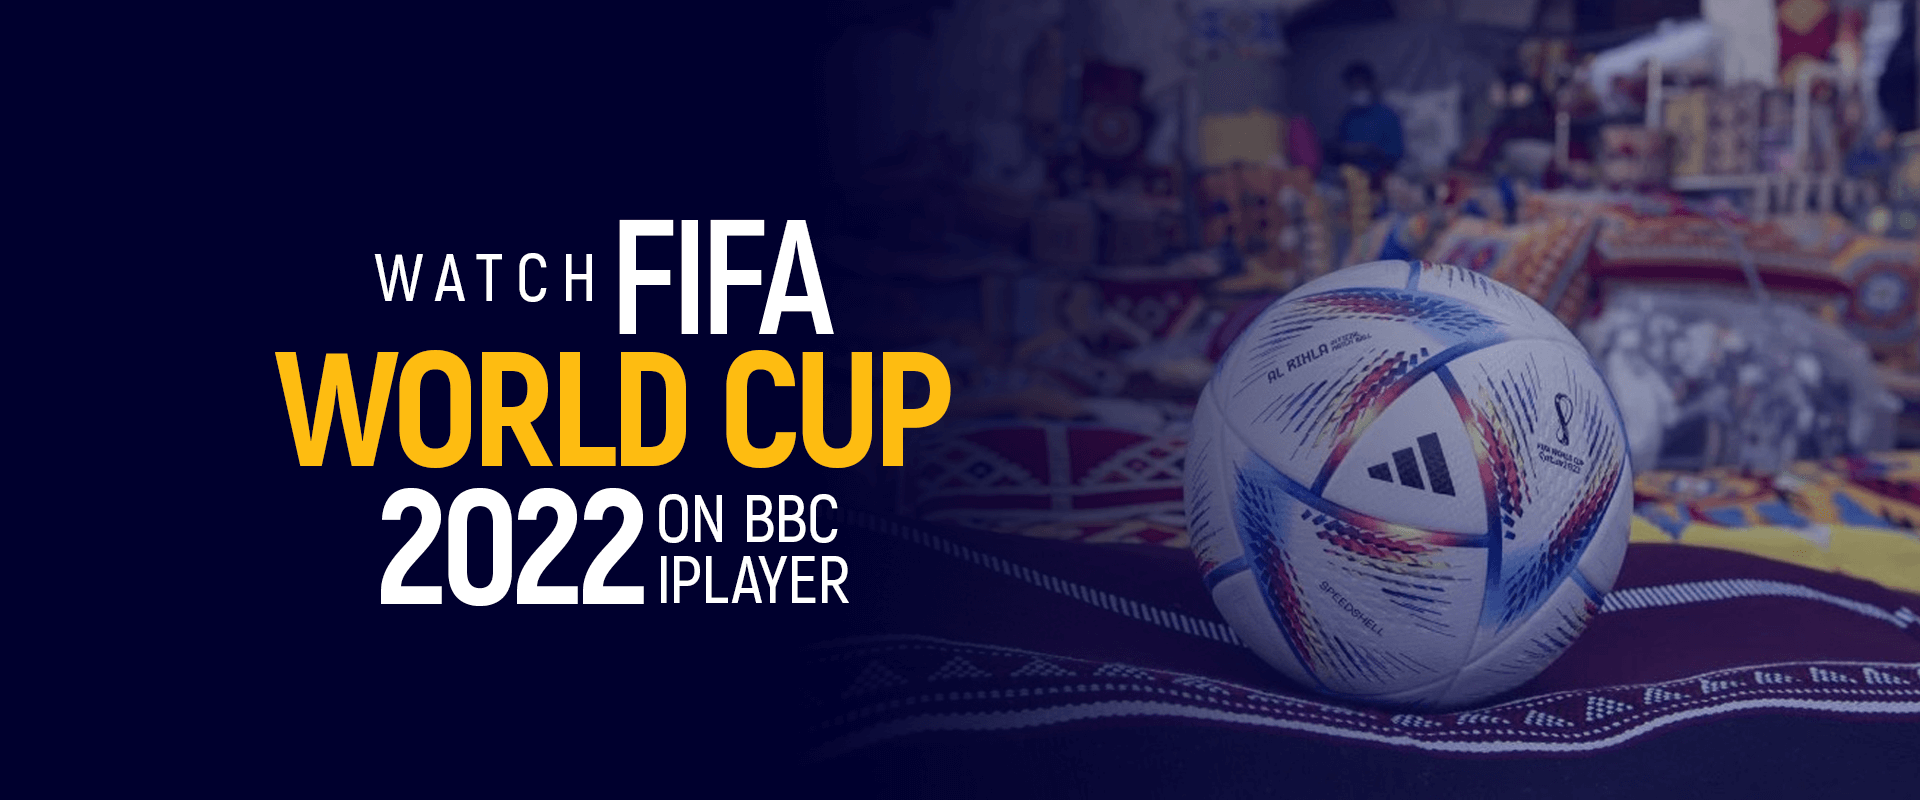 bbc fifa world cup live